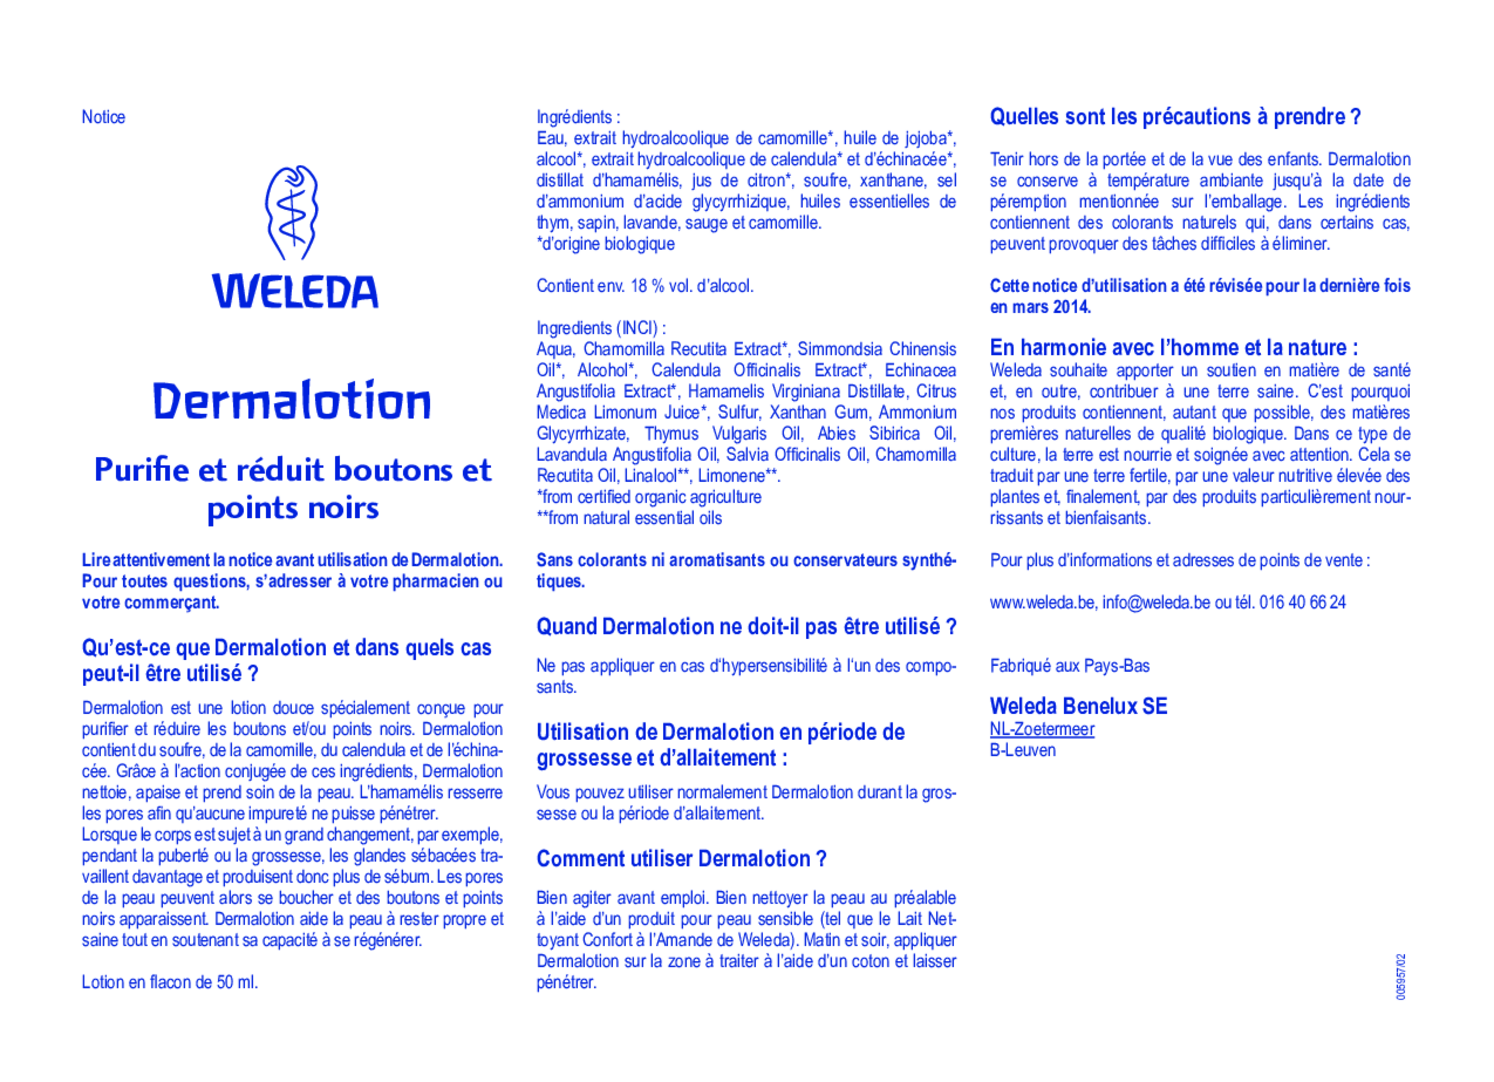 Dermalotion afbeelding van document #2, gebruiksaanwijzing